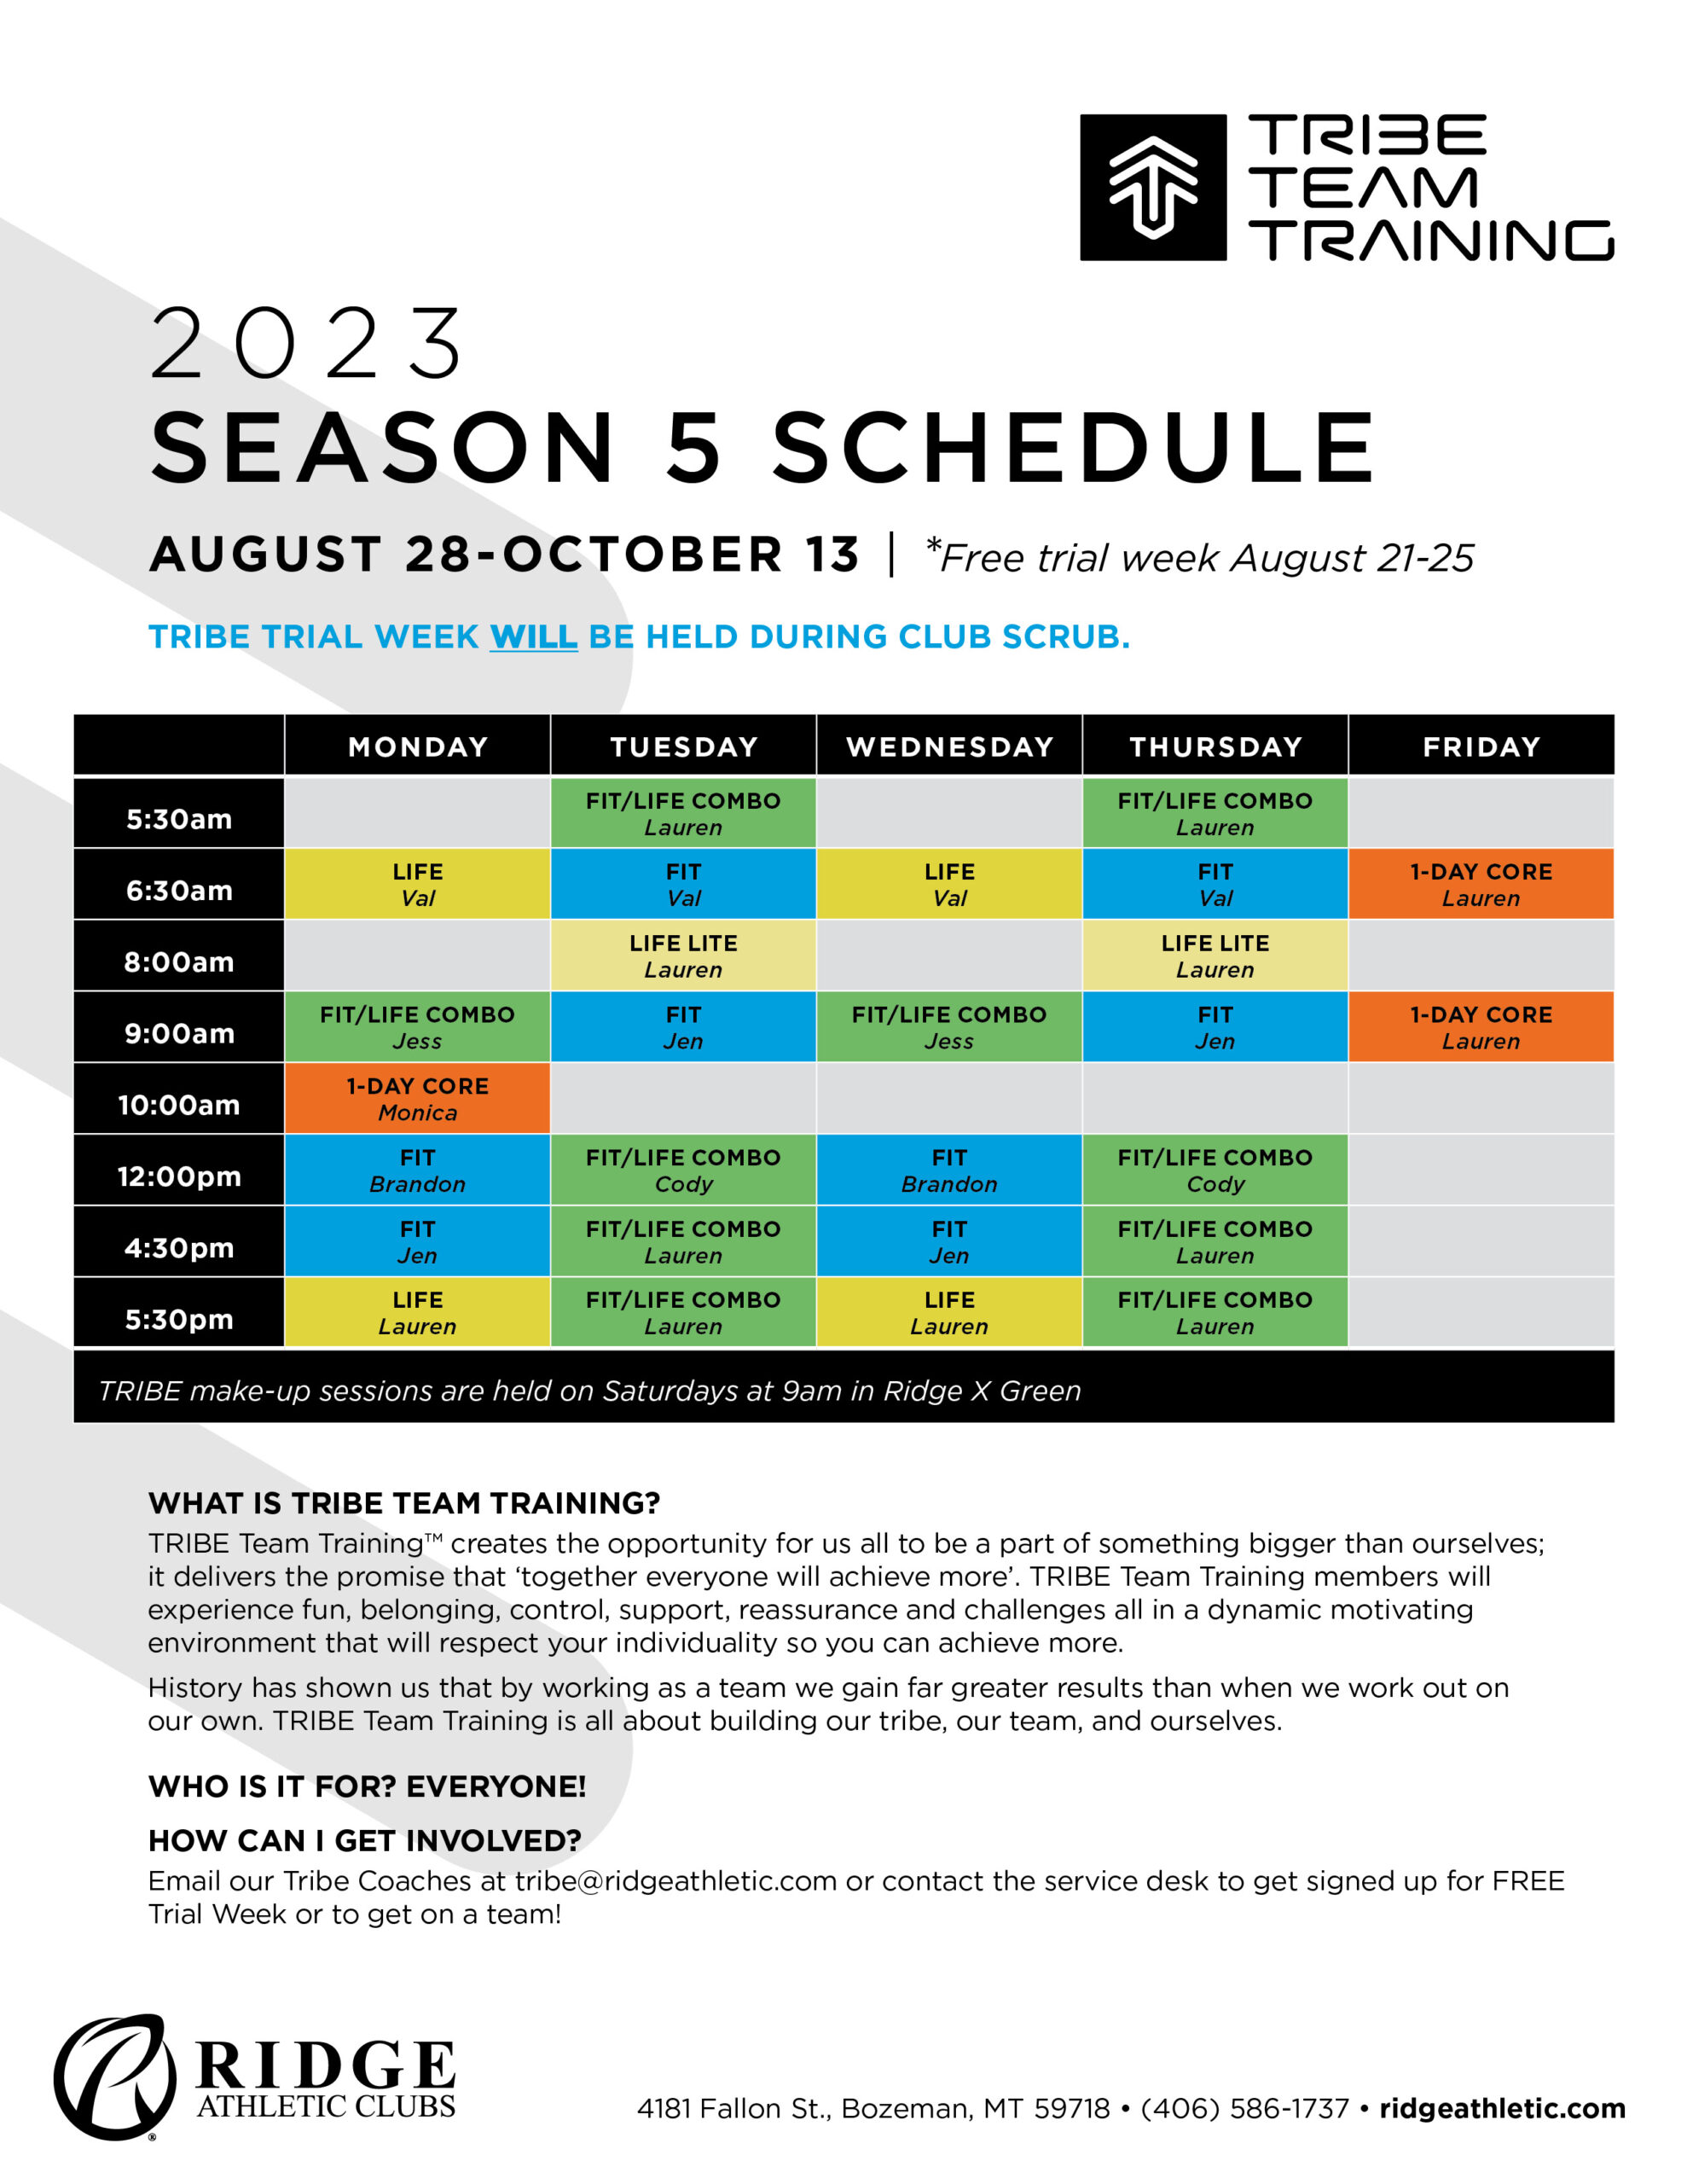 Tribe Season 5 schedule